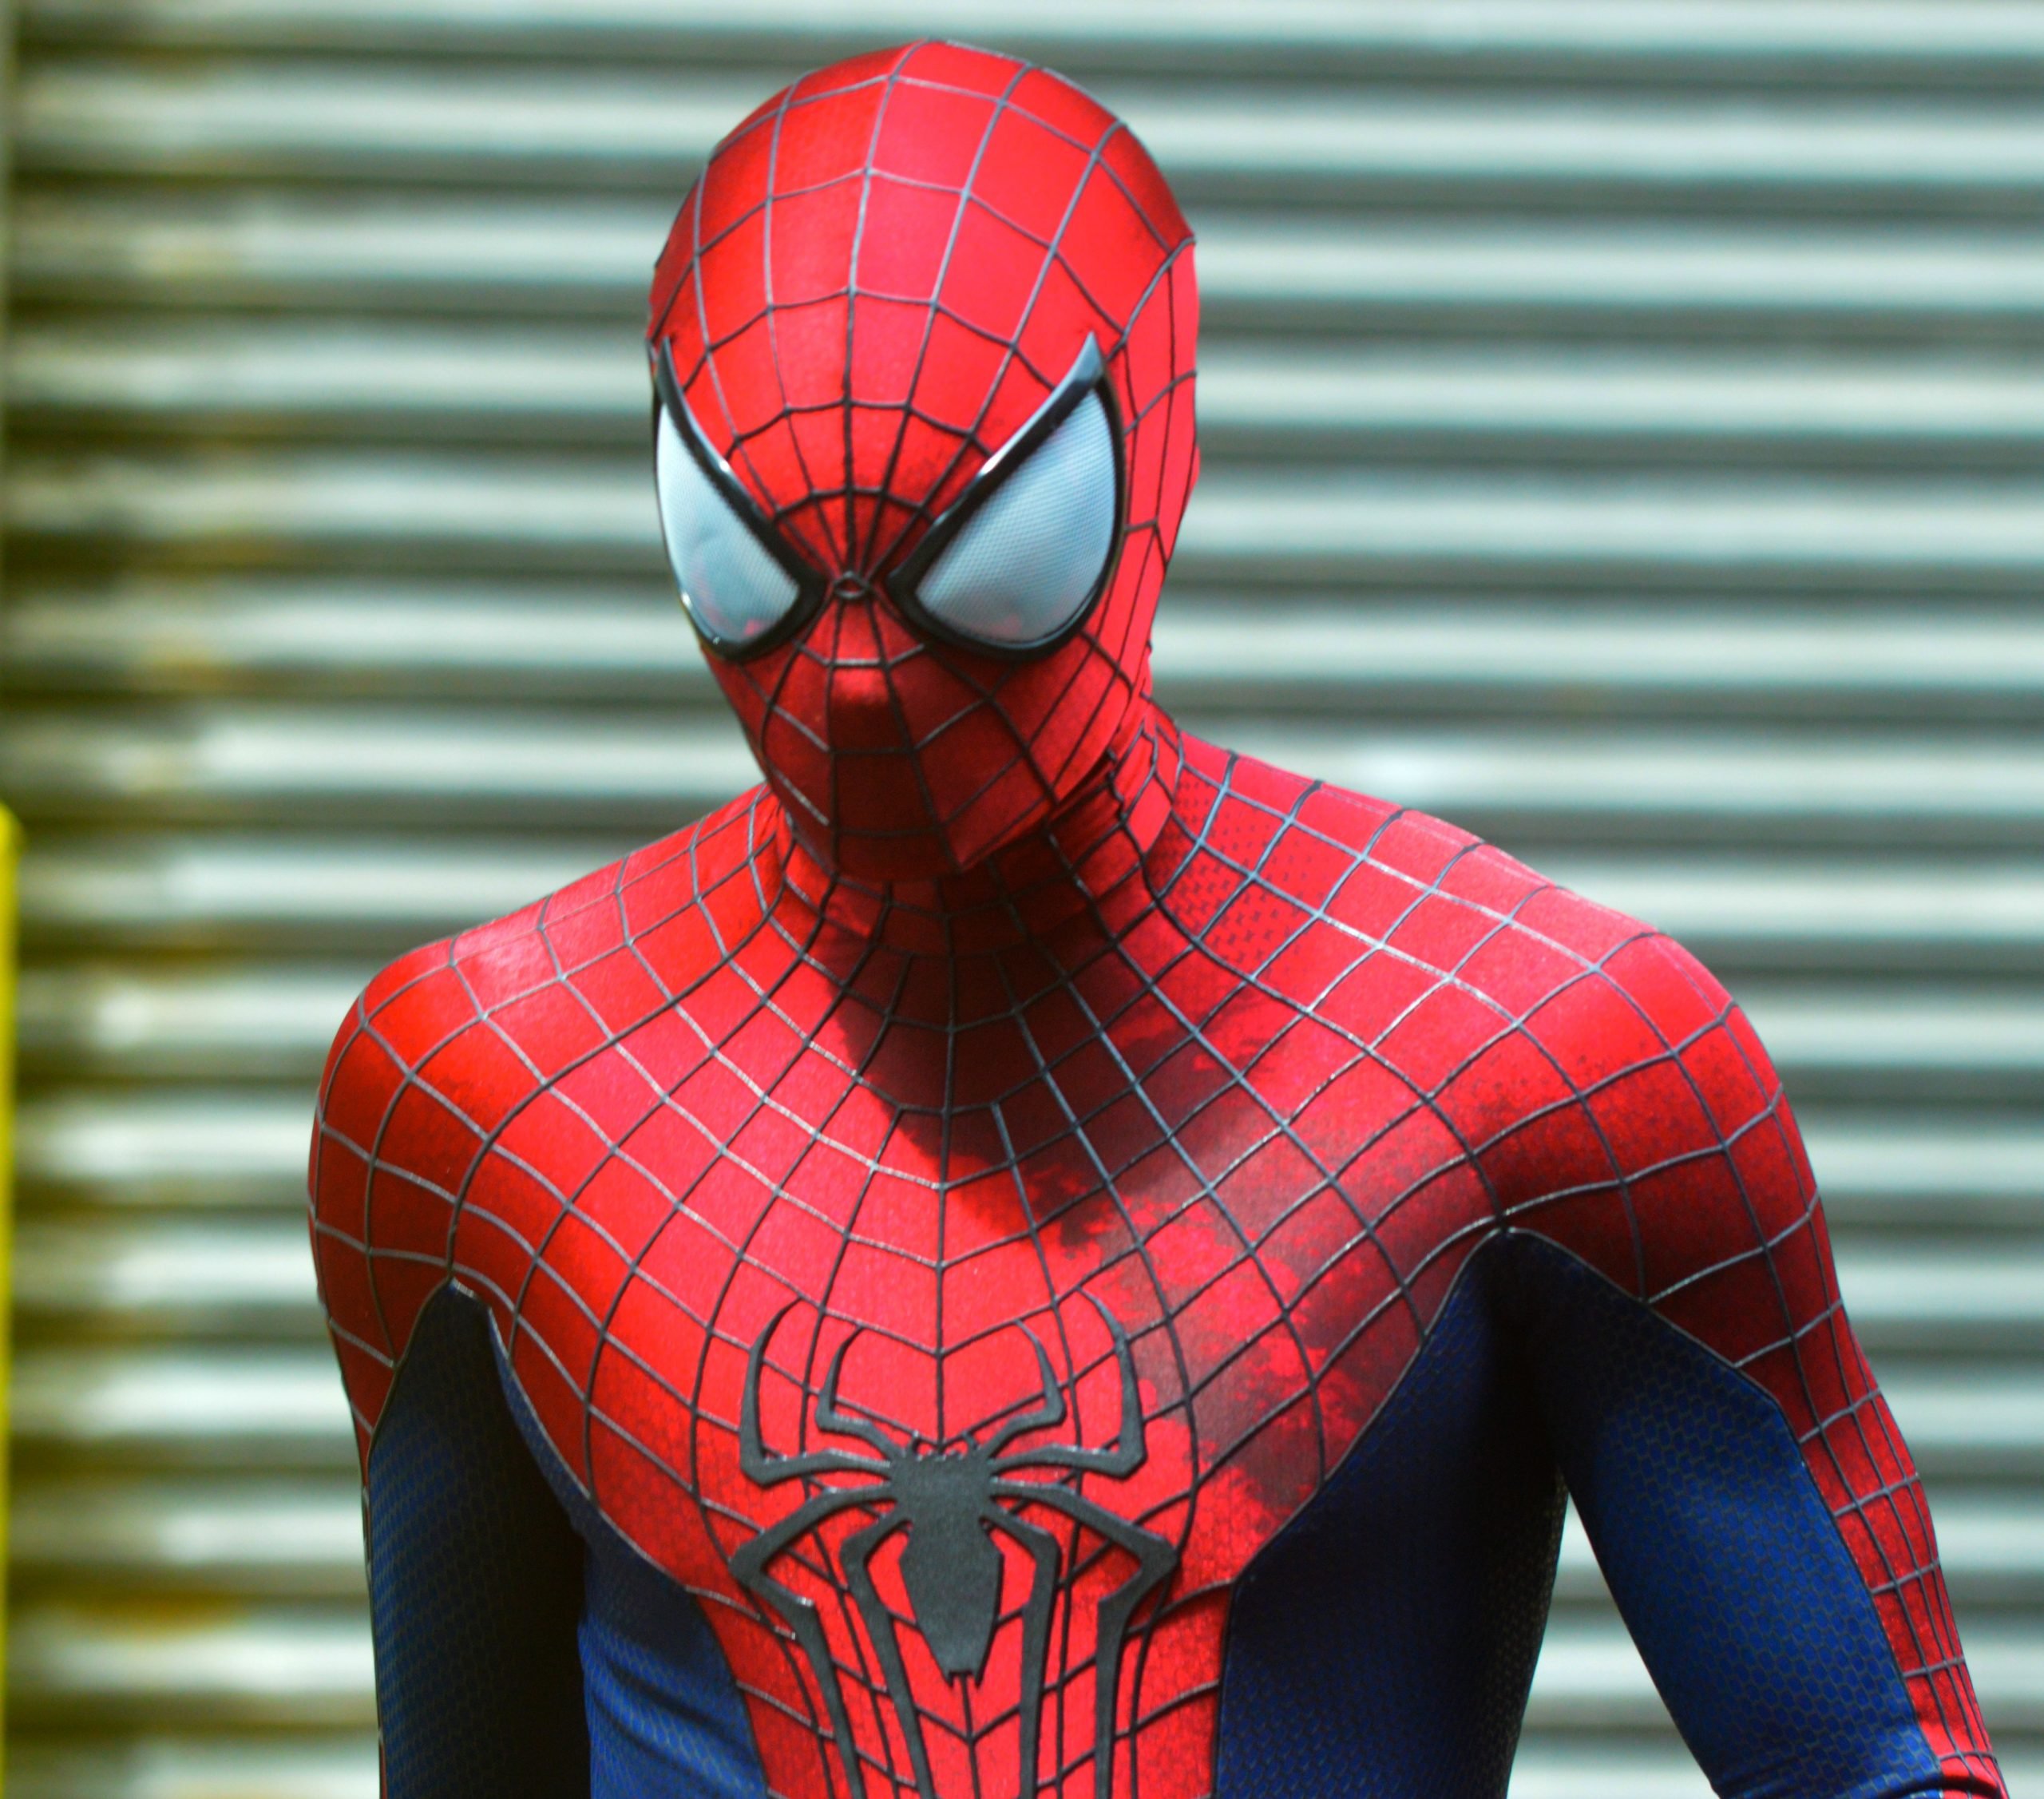 Spider-Man | Articles and Latest News | Showbiz Cheat Sheet